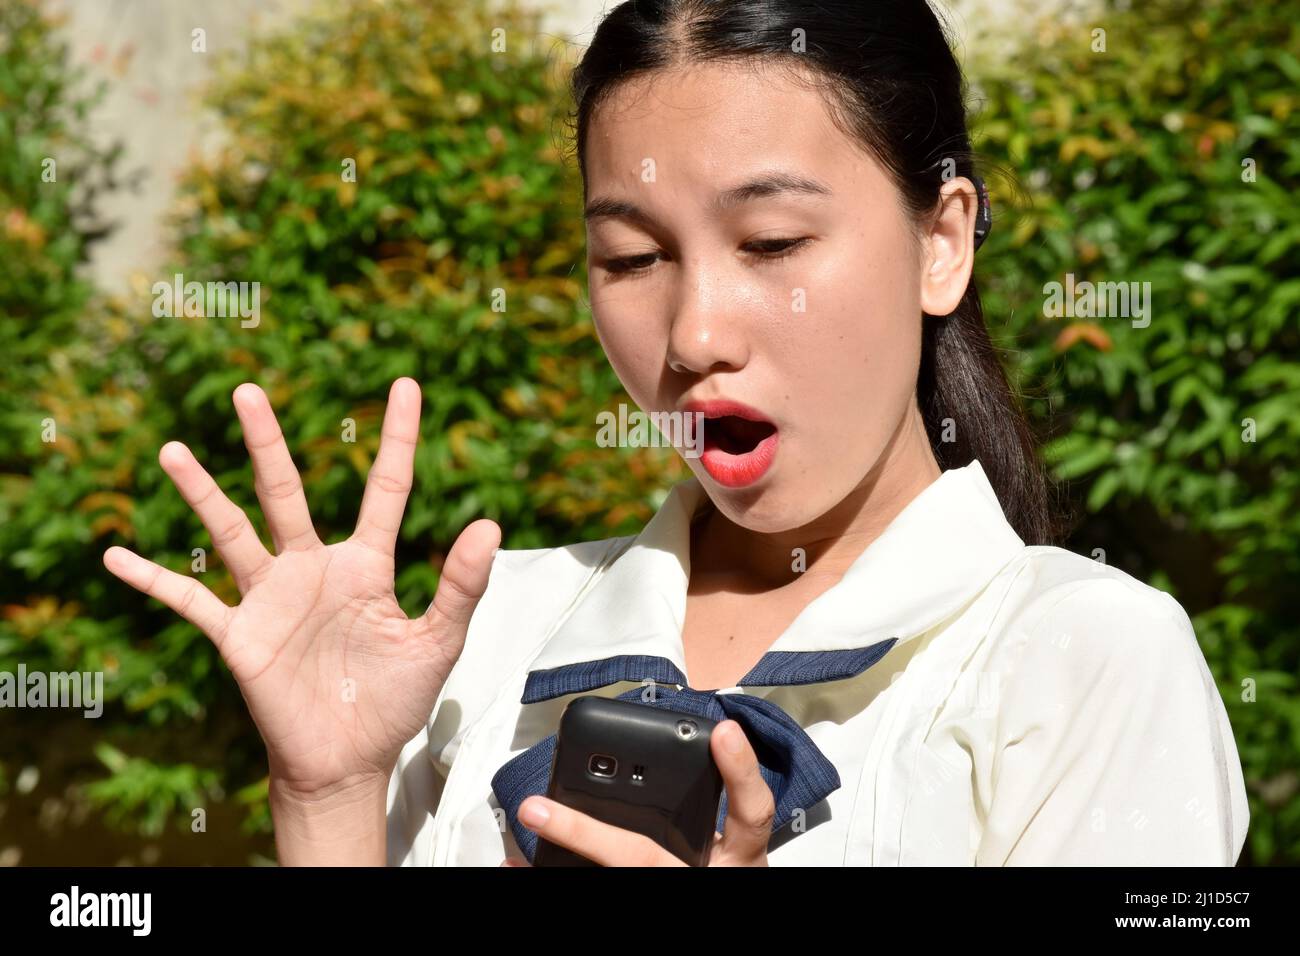 Shocked Filipina Adult Female With Mobile Phone Stock Photo